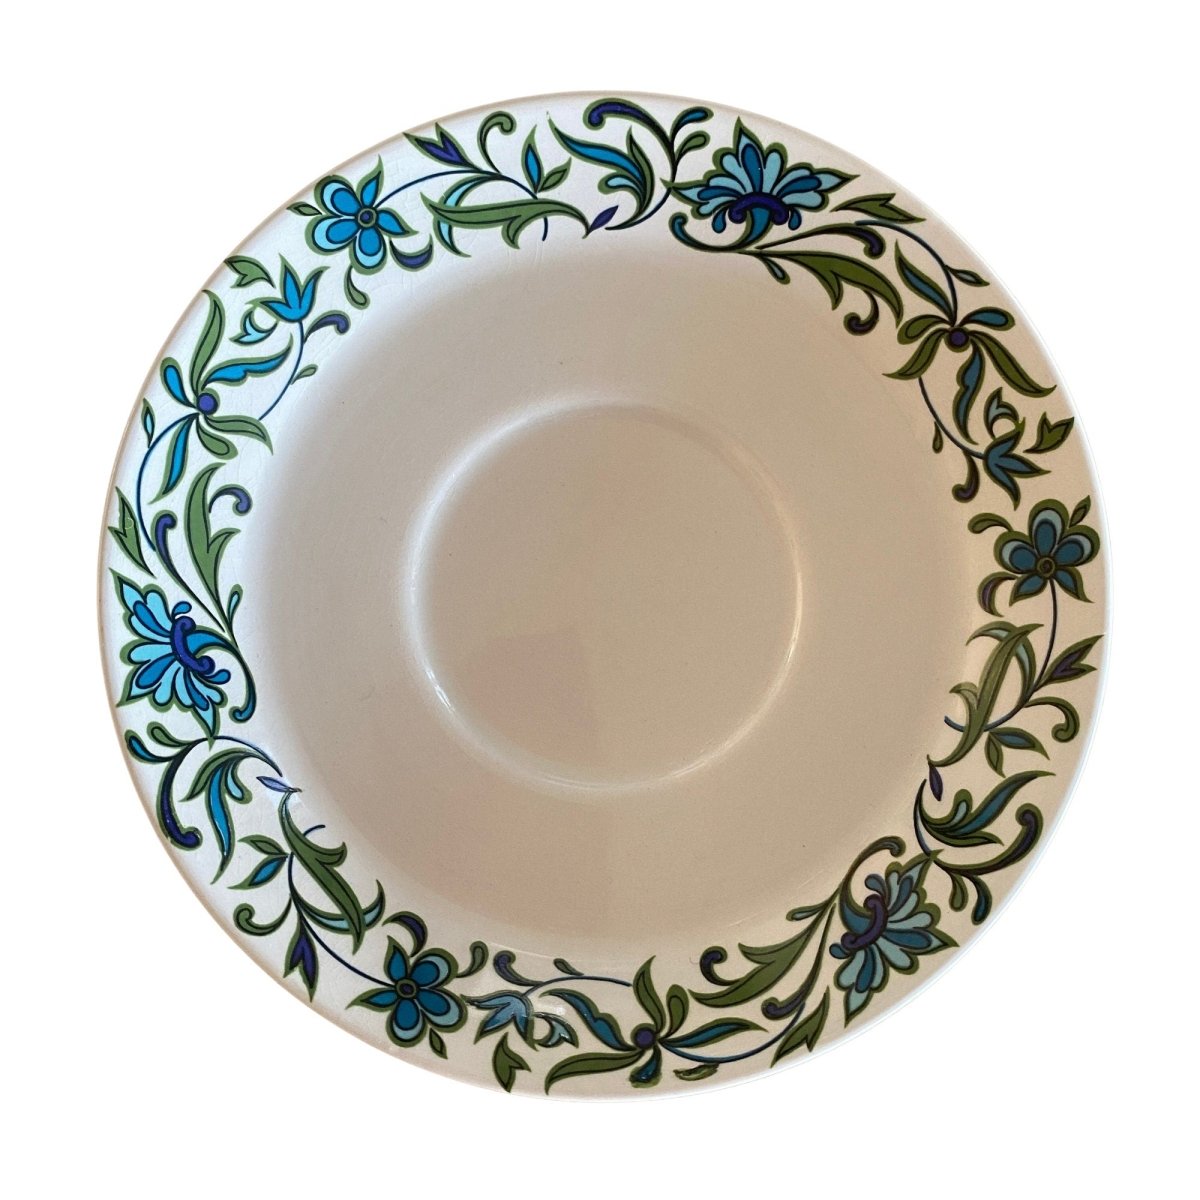 Midwinter | Spanish Garden | Jessie Tait | Retro MisMatched Mosaic Tableware, Vintage Cups & Saucers - Chinamania.shop